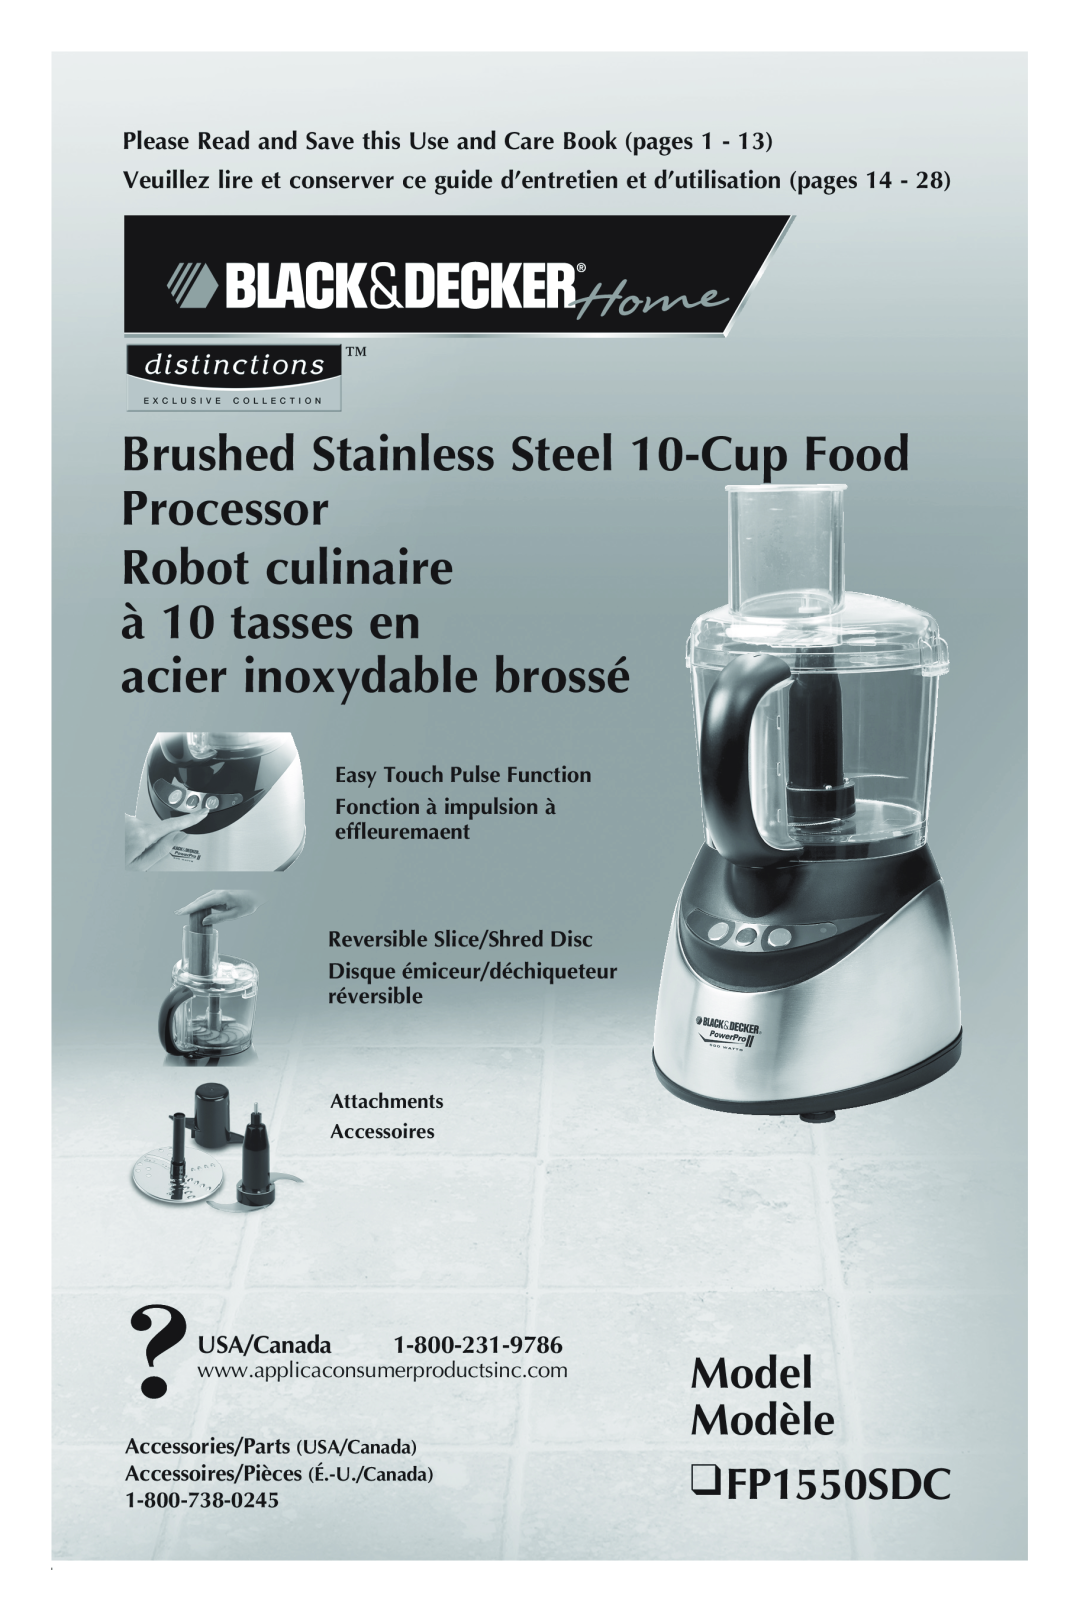 Black & Decker manual Model Modèle FP1550SDC, Brushed Stainless Steel 10-Cup Food Processor, acier inoxydable brossé 